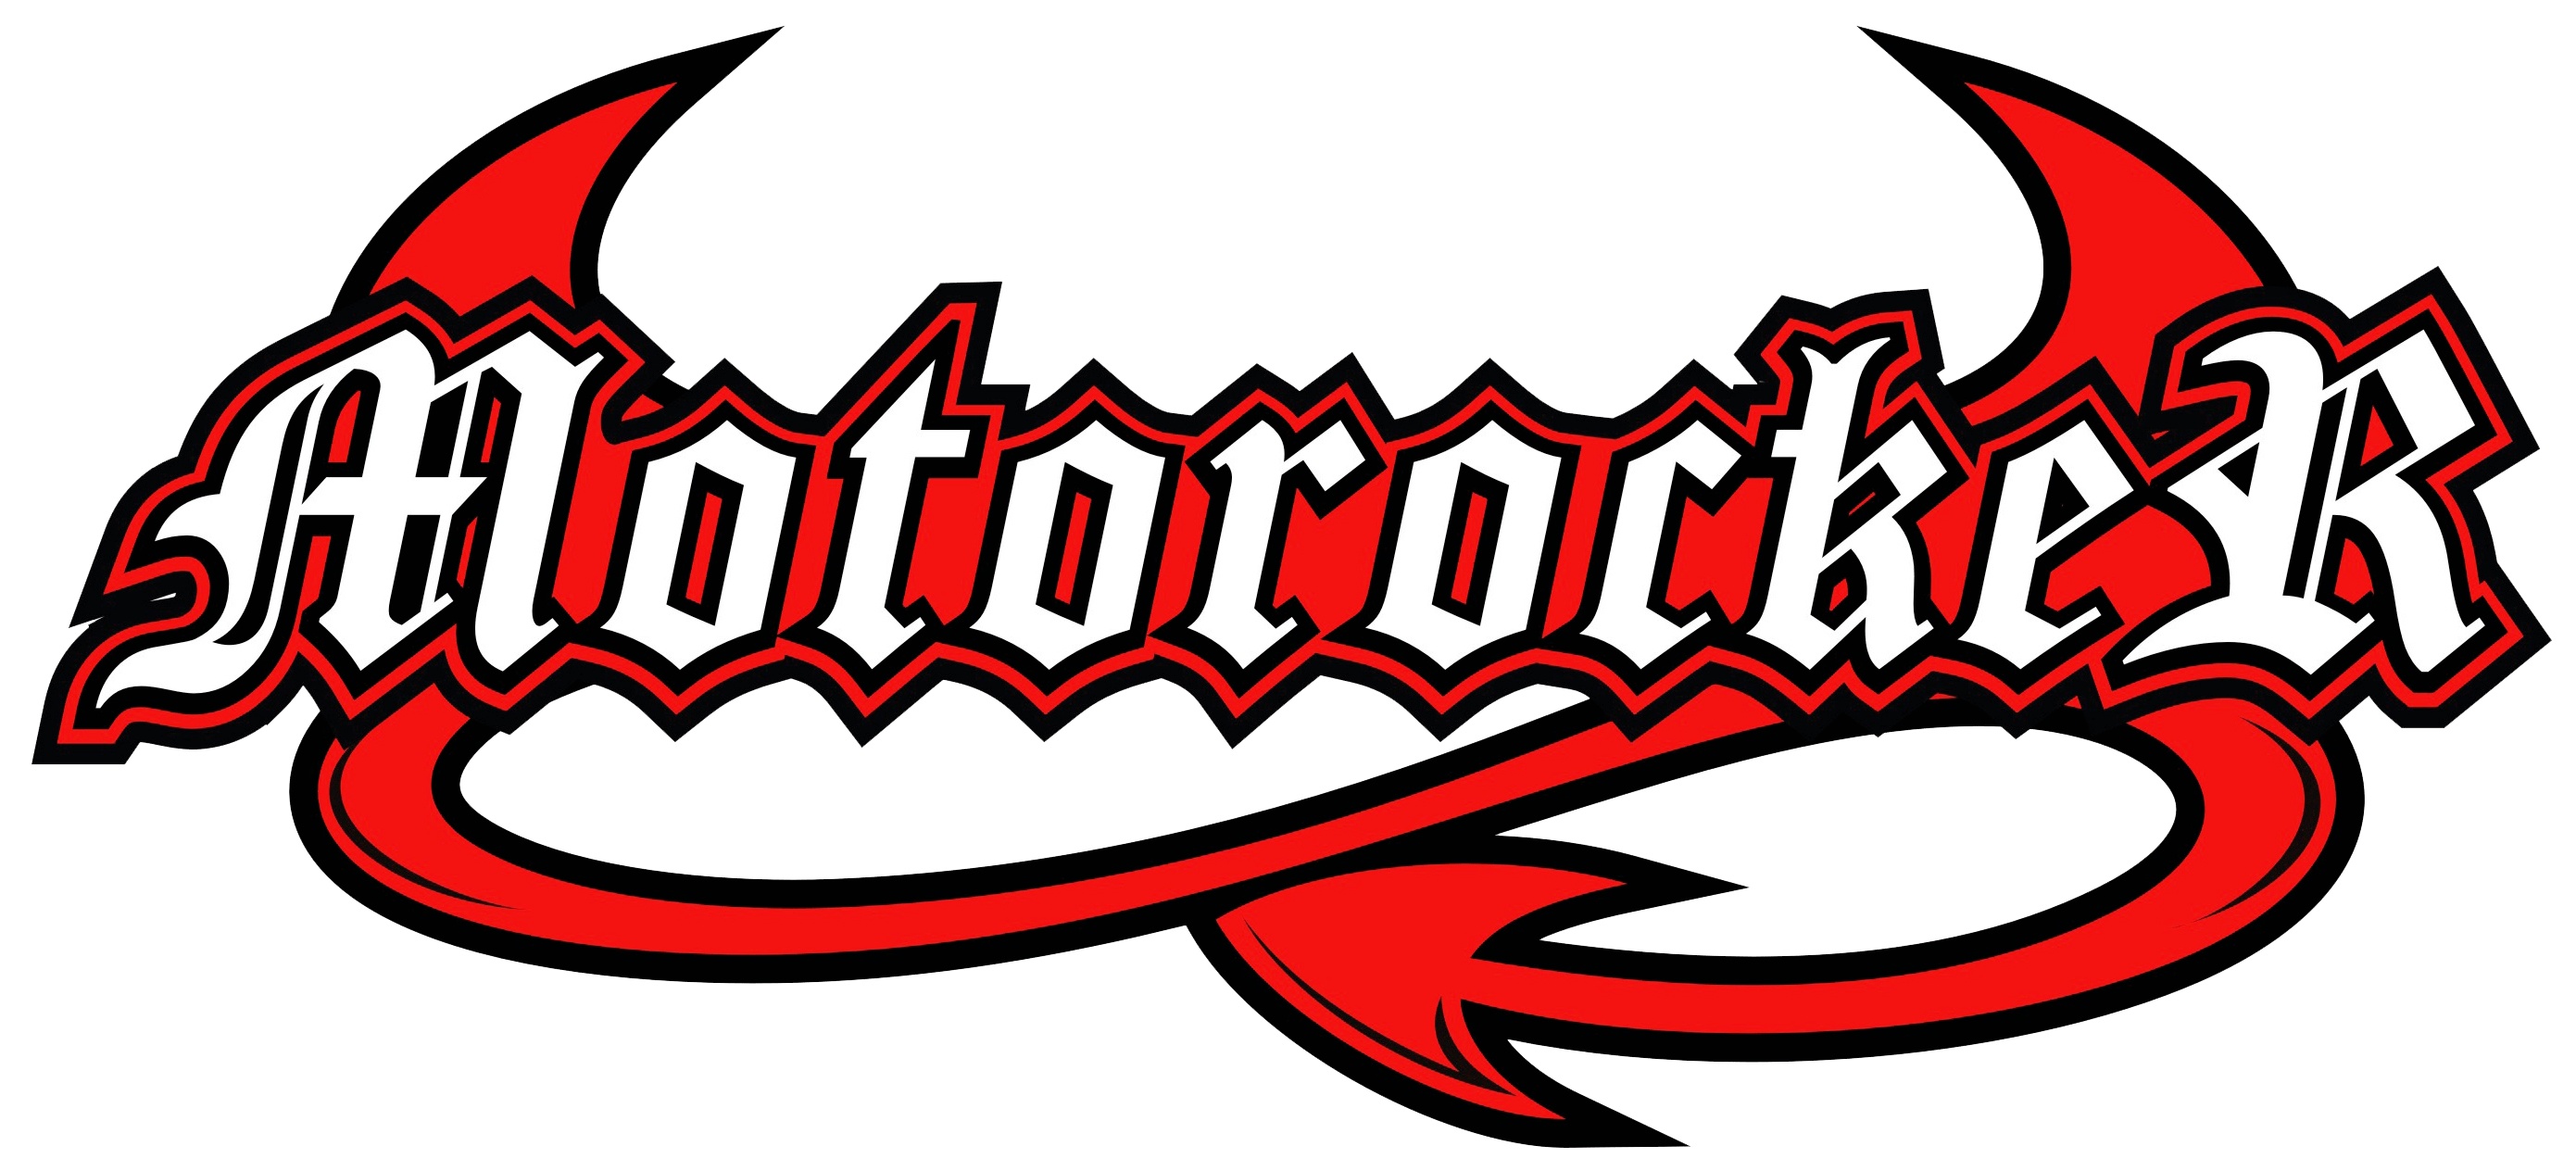 Motorocker – Loja oficial